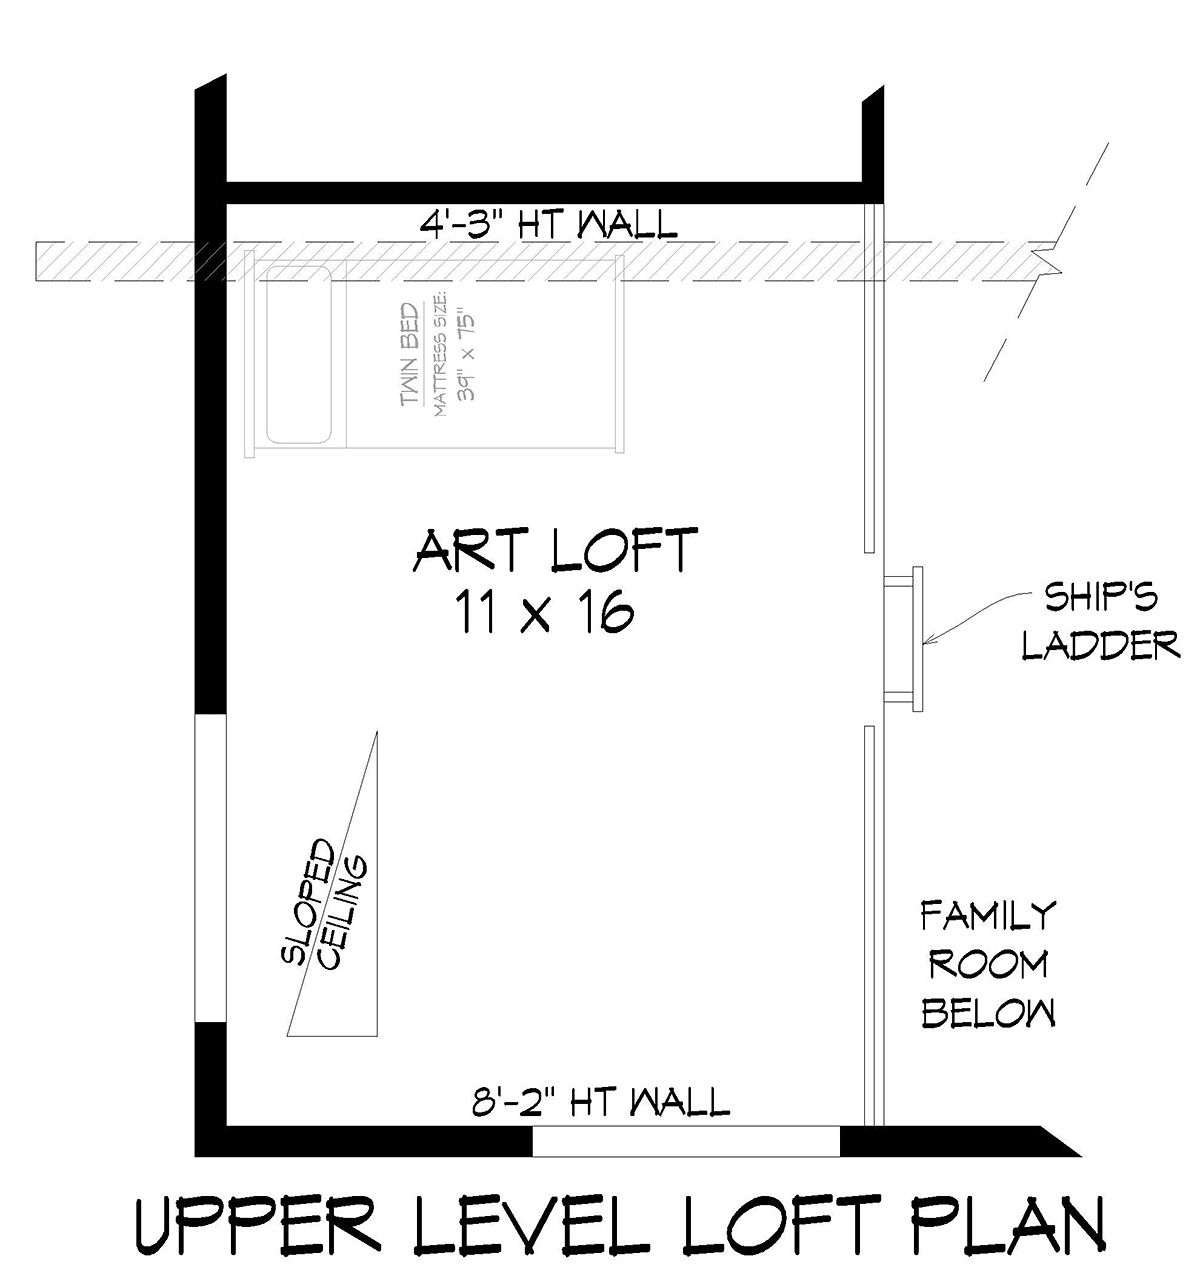 House Plan 81760 Alternate Level Two